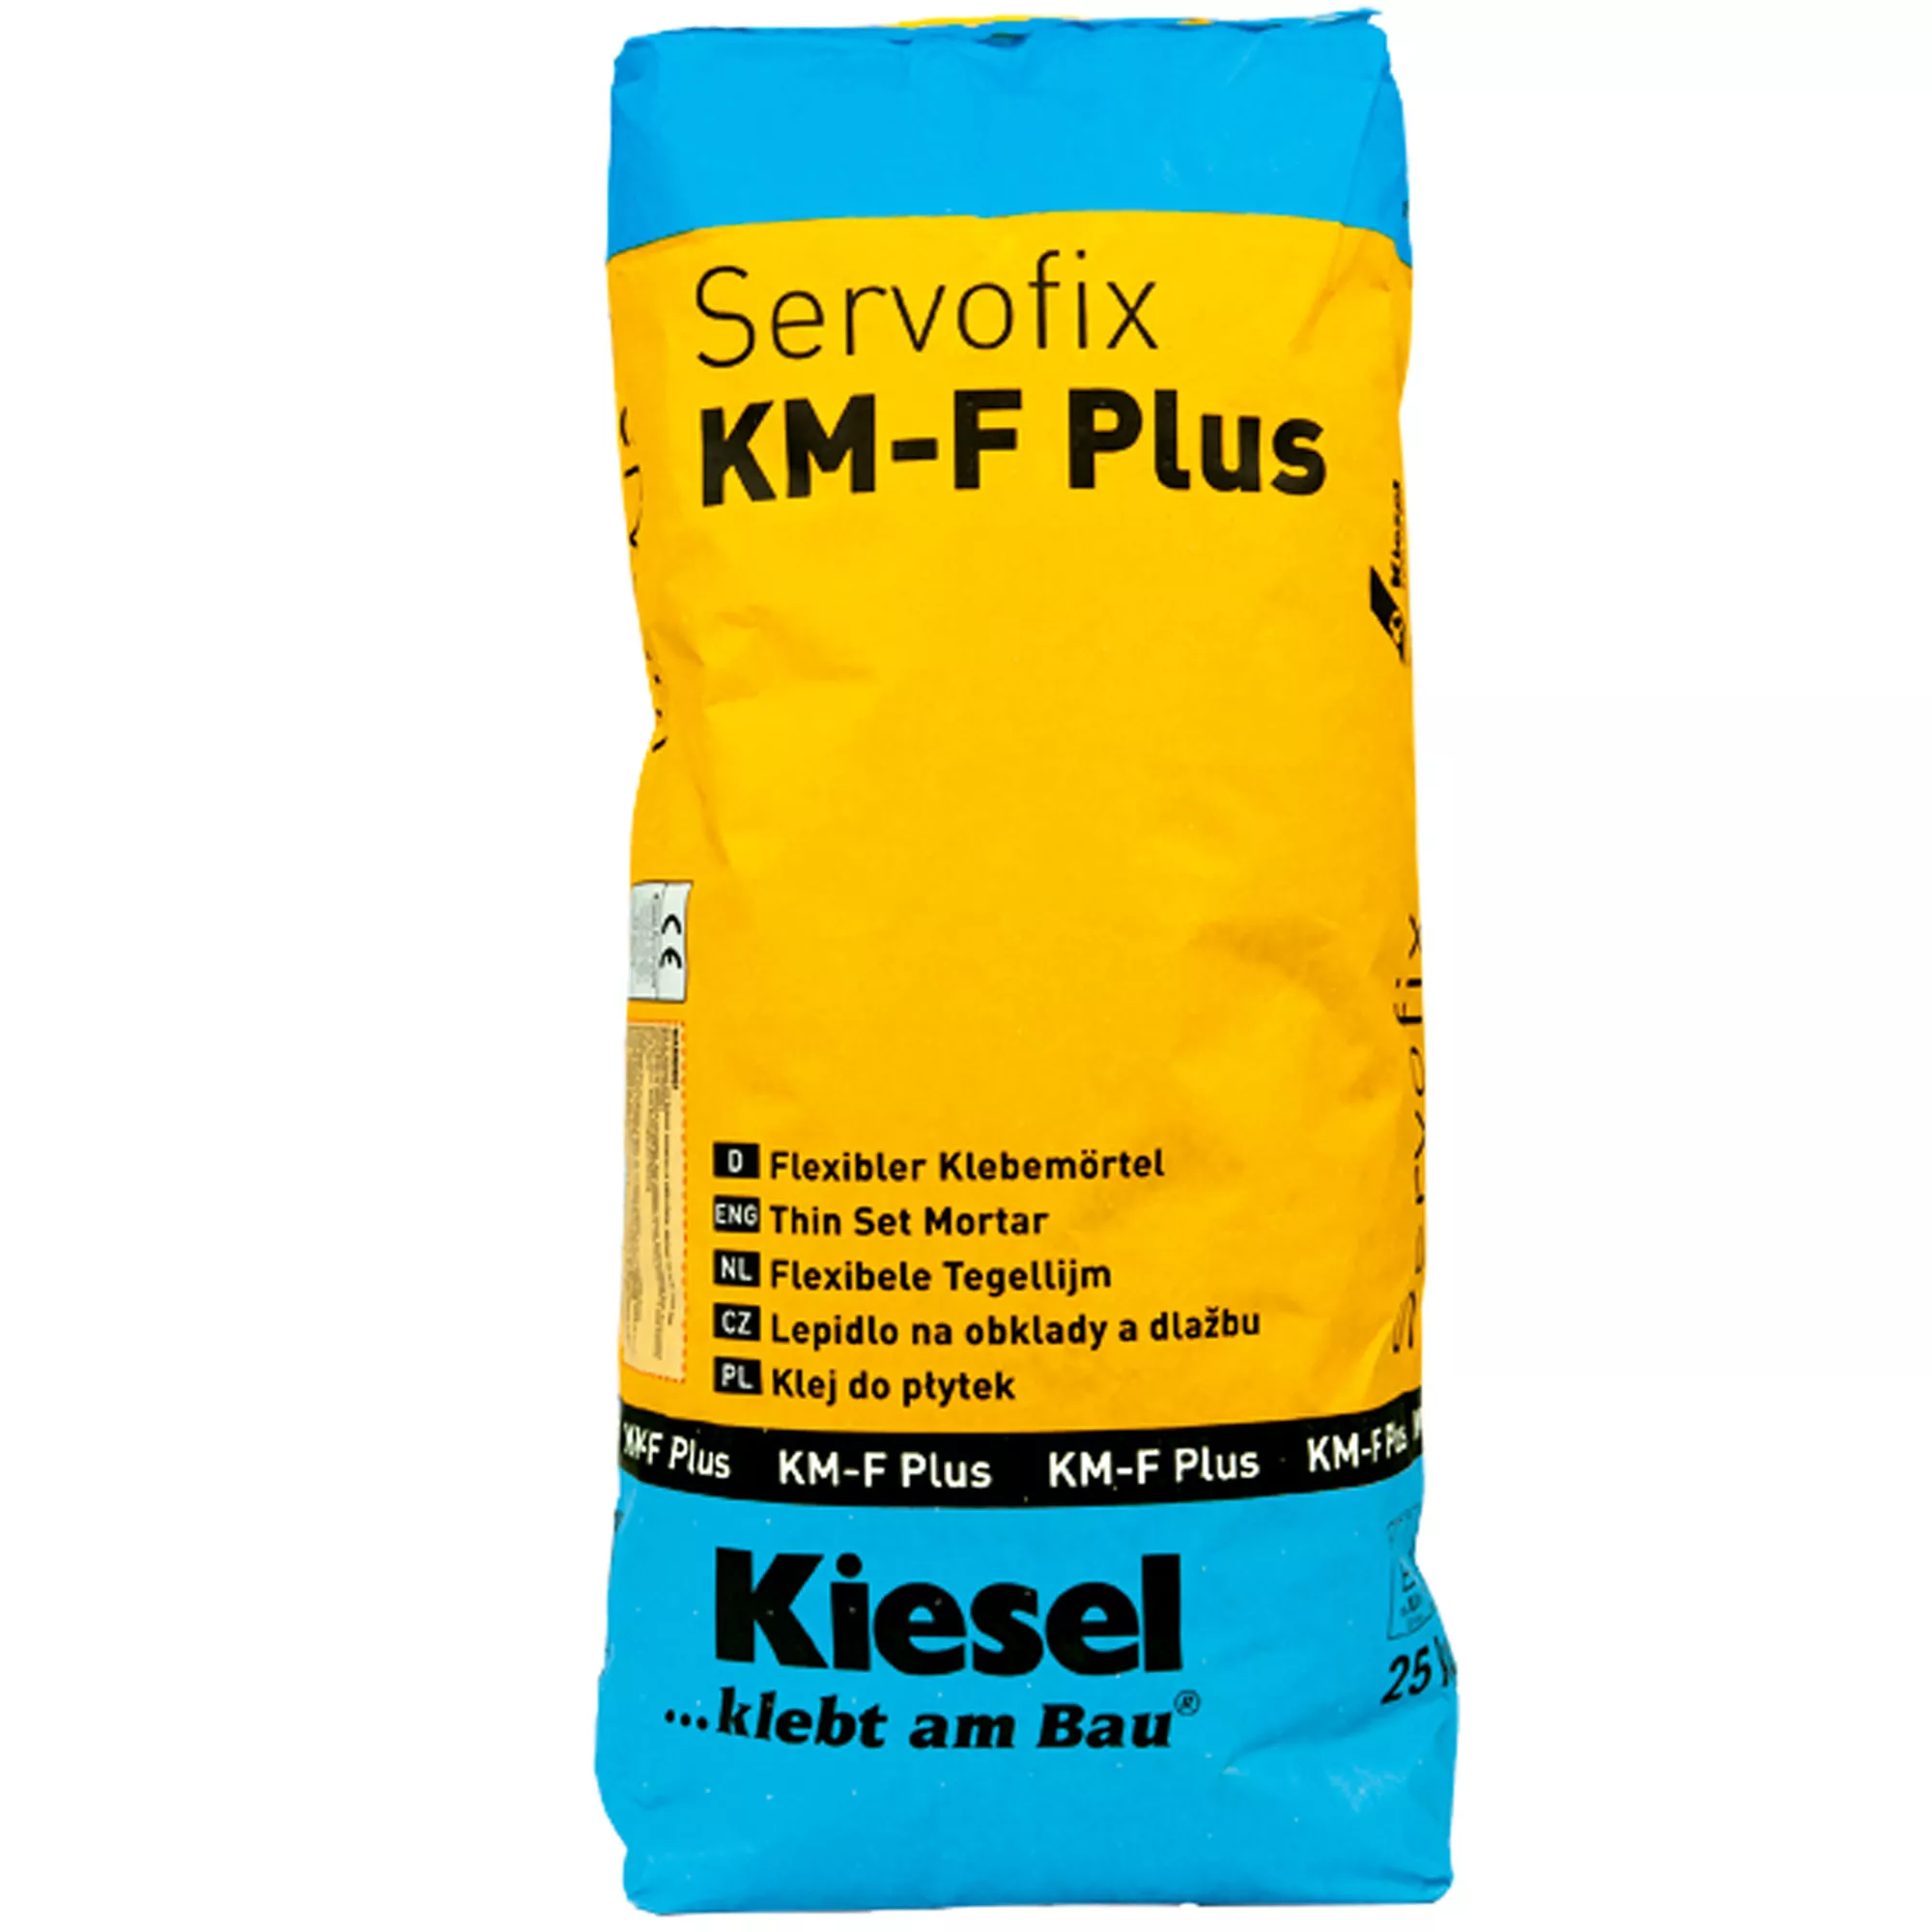 Kiesel Fliesenkleber Servofix KM-F Plus - flexibler Klebemörtel 25 Kg